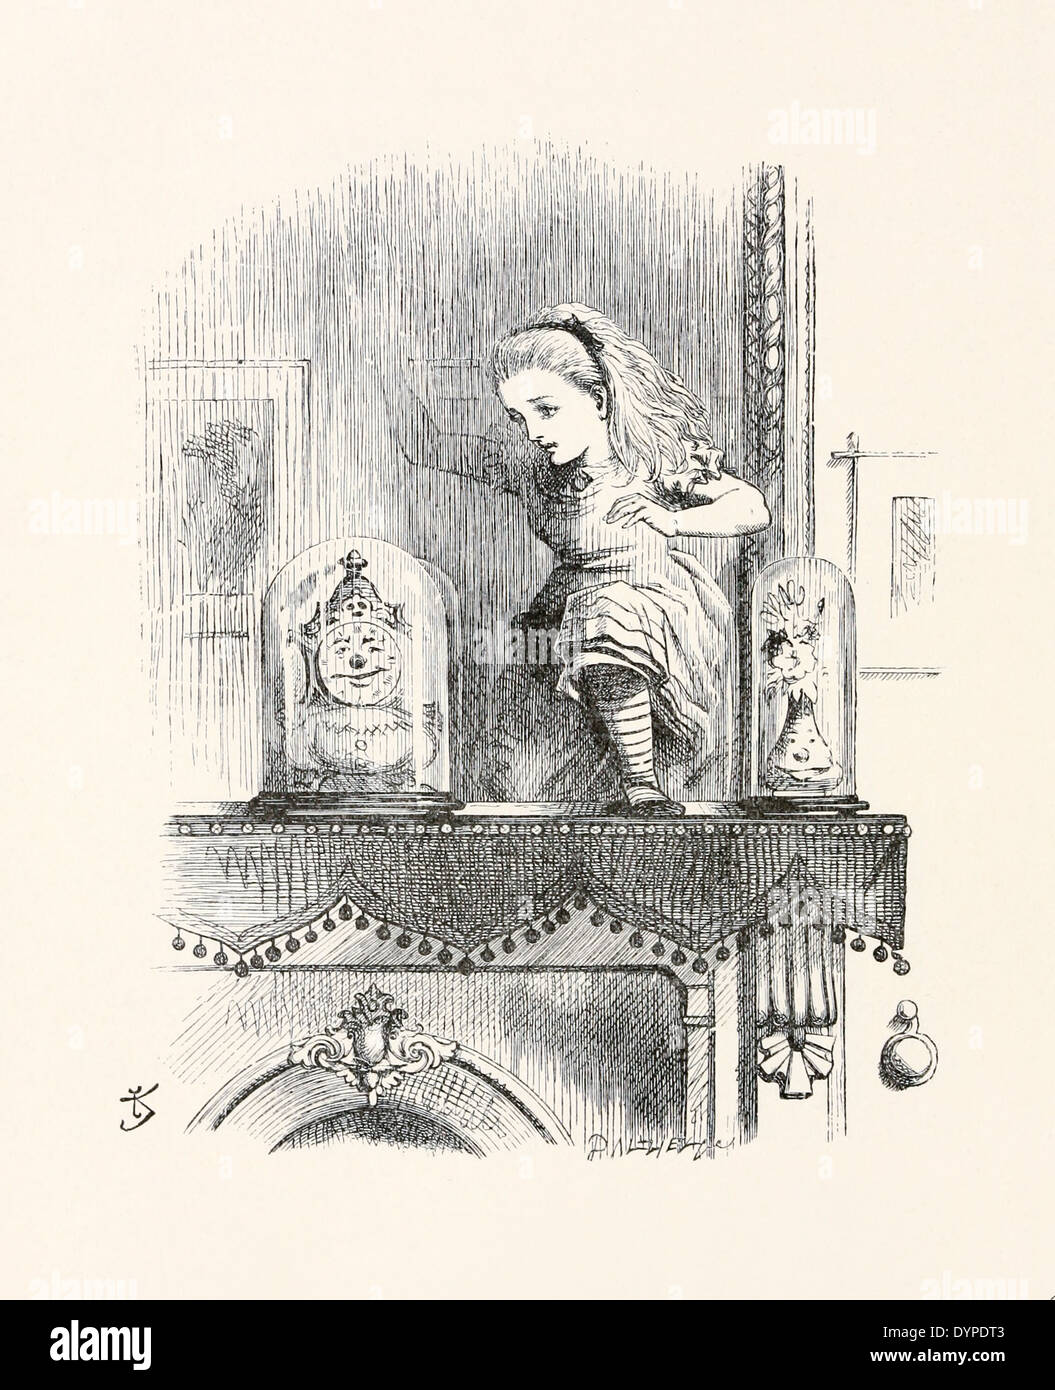 John Tenniel (1820-1914) illustration from Lewis Carrol's 'Through the ...